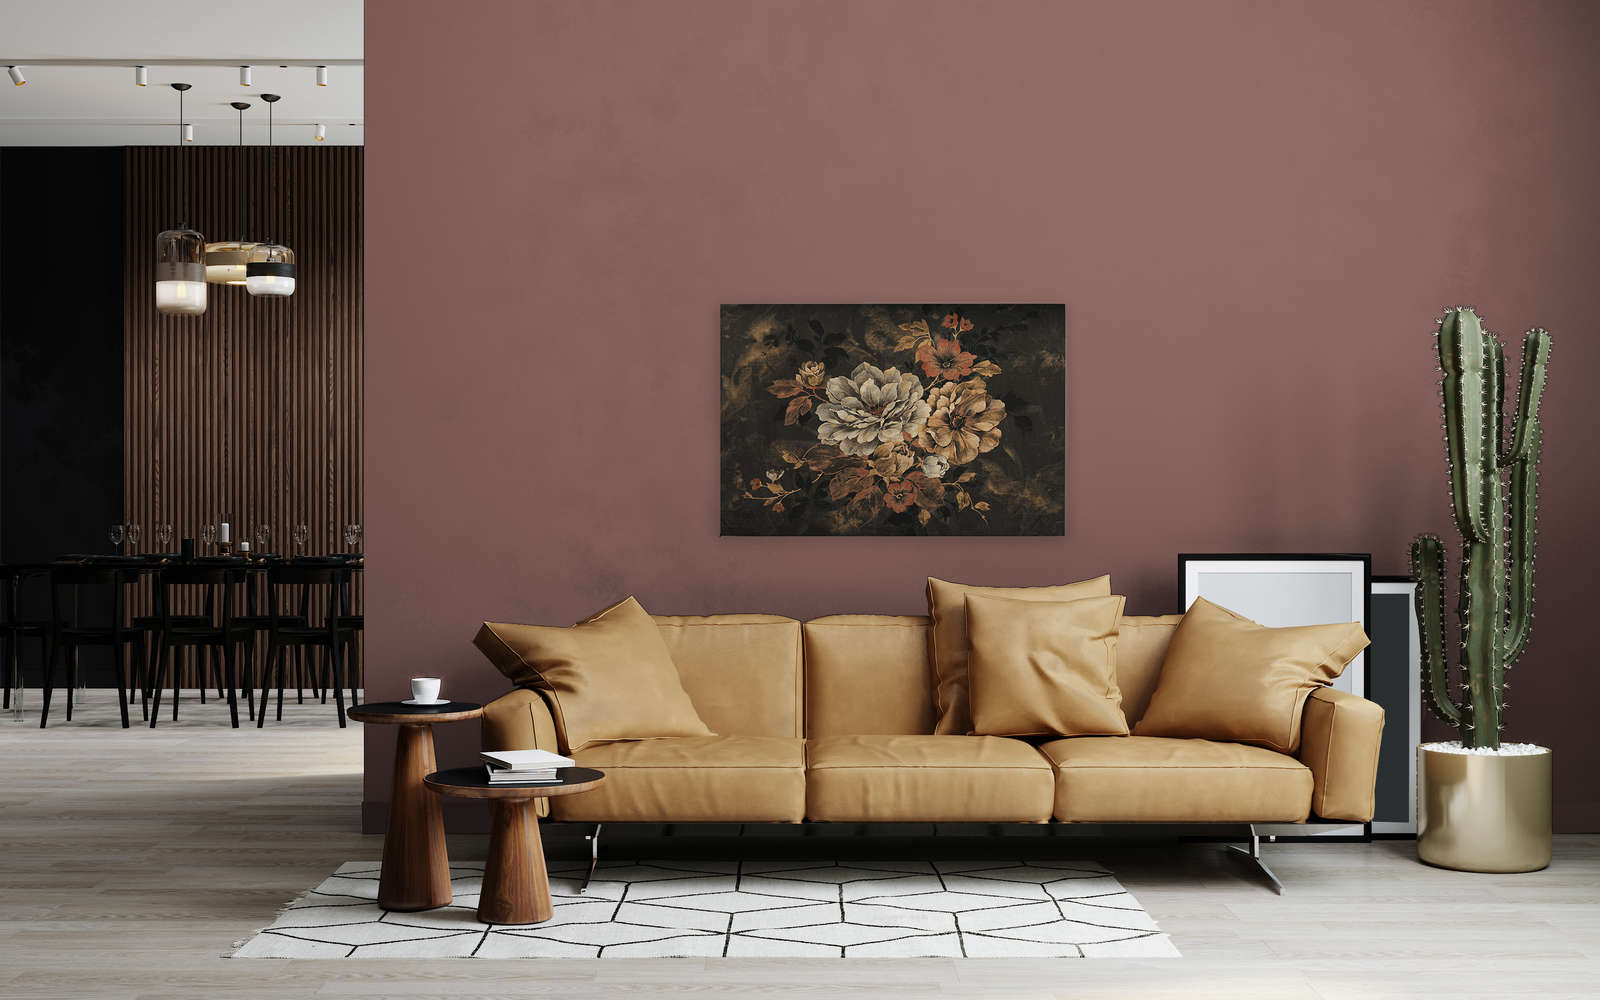             Leinwandbild Blütendesign, Ölgemälde im Vintage Look – 1,20 m x 0,80 m
        